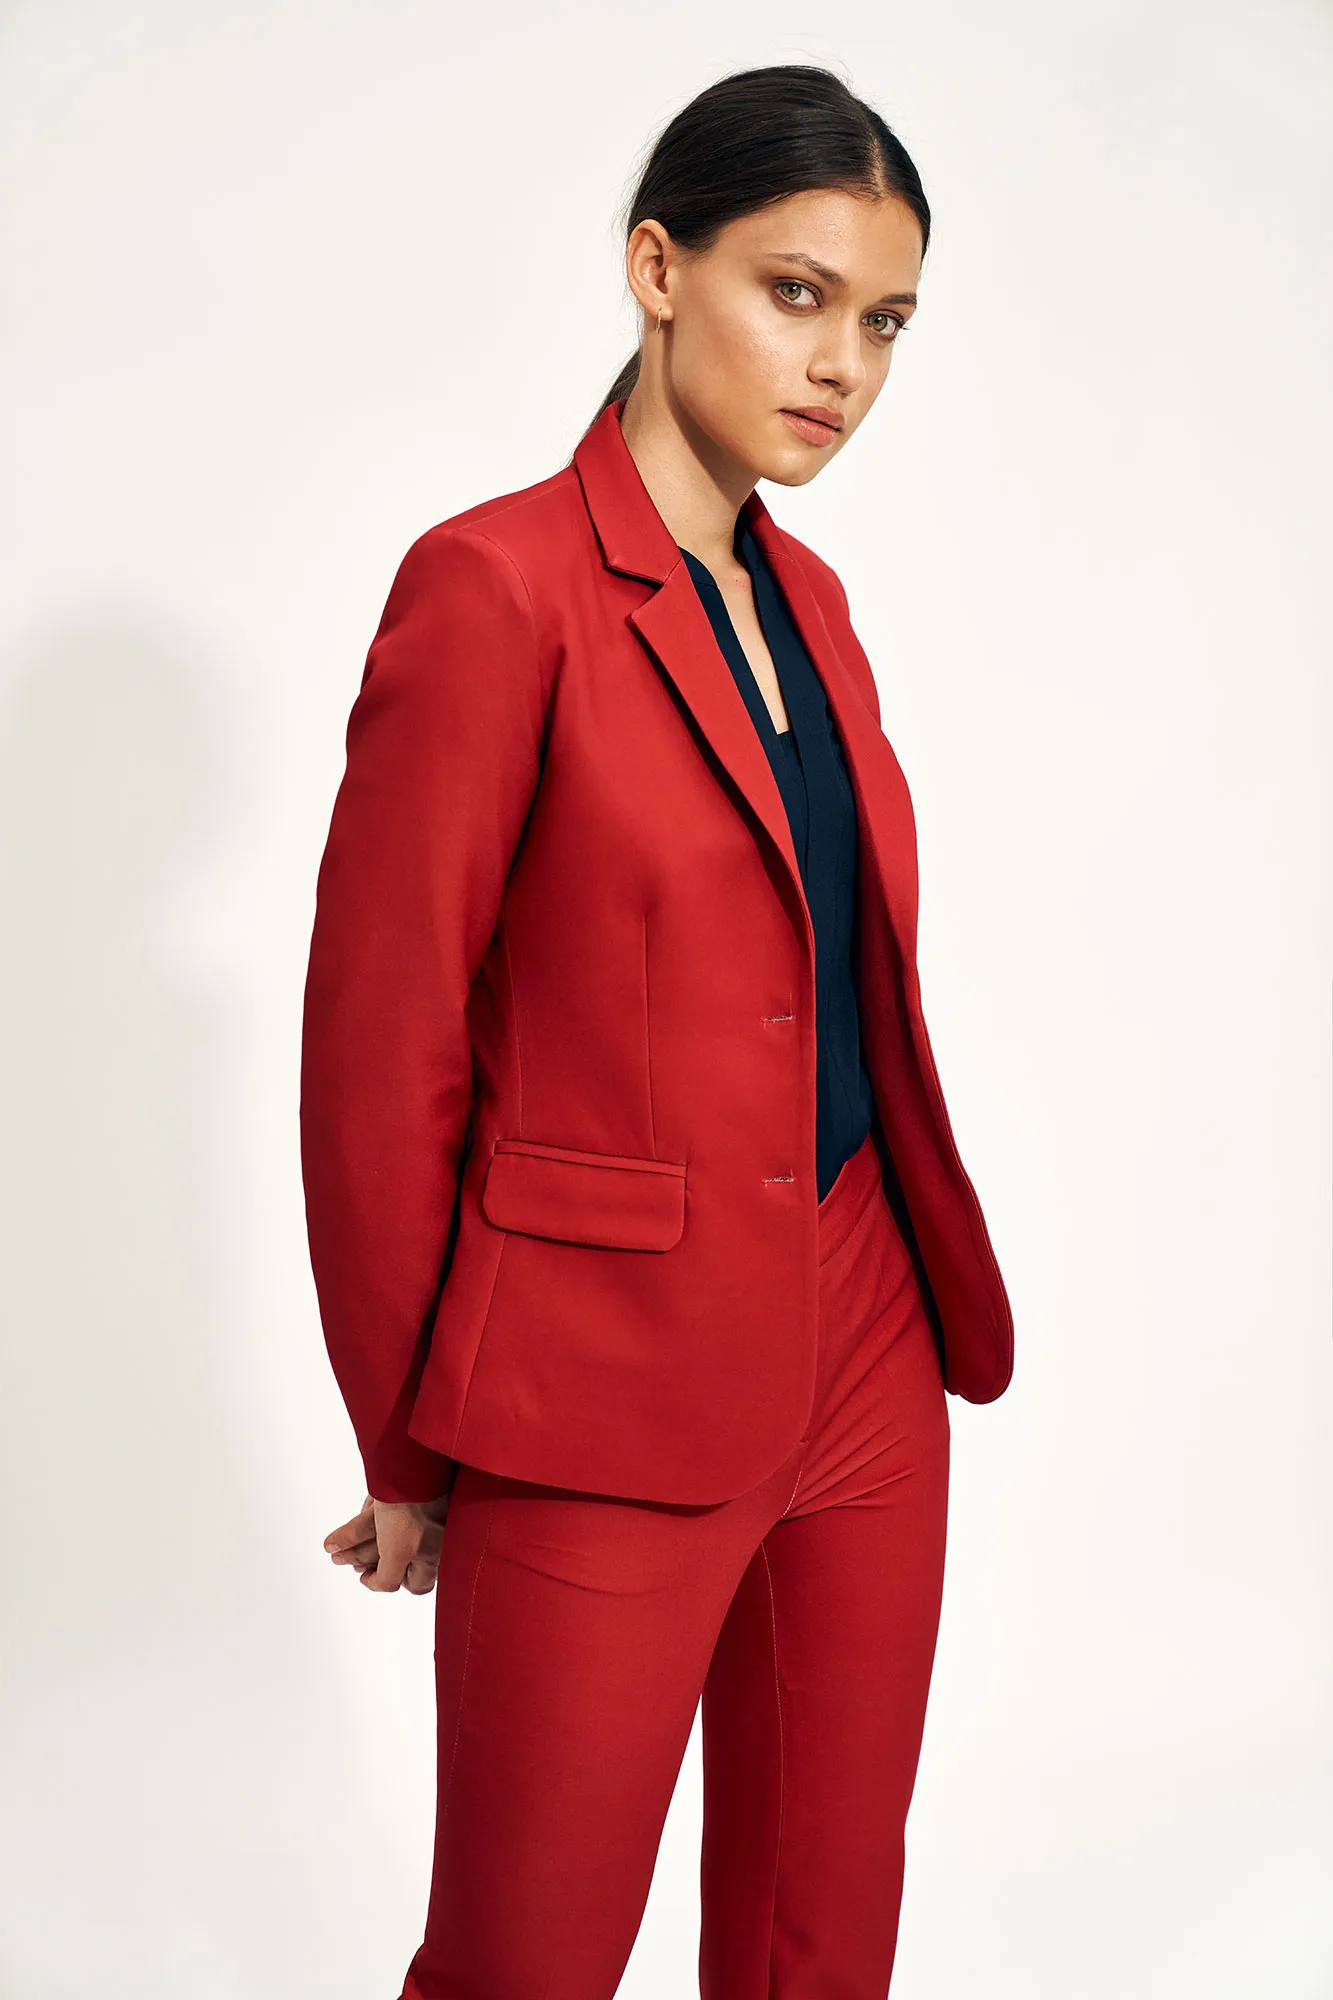 Red Classic Suit Women, Red Blazer Pant Suit